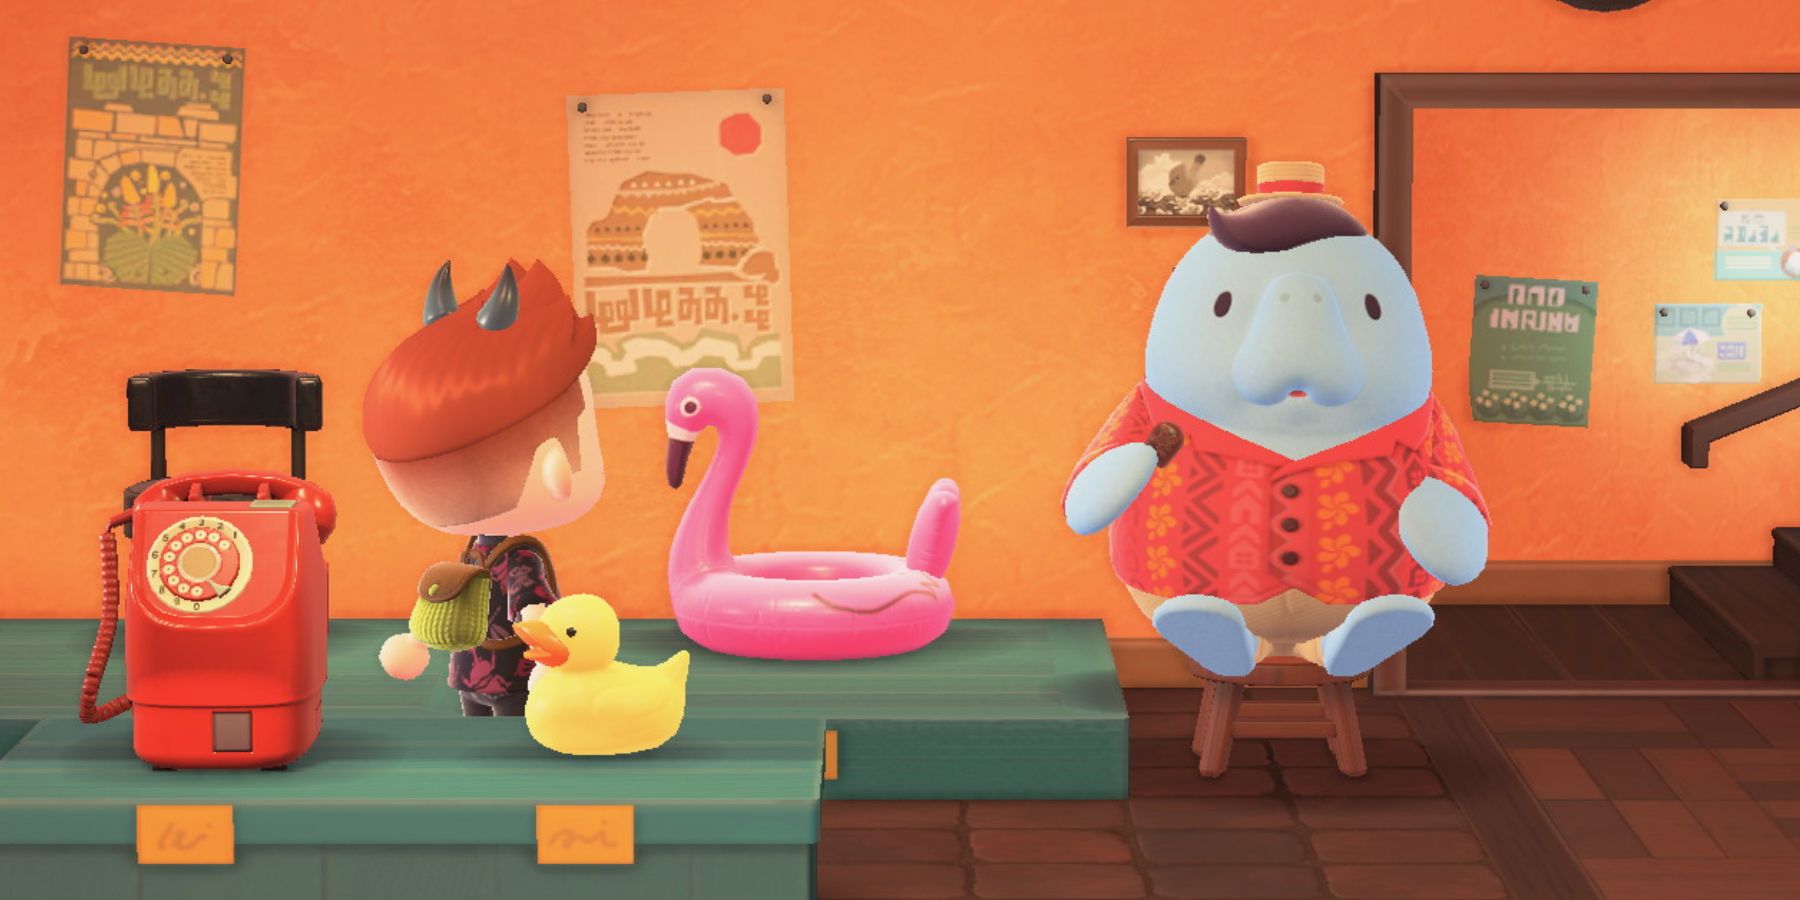 Animal Crossing Best New Items to Buy with Poki